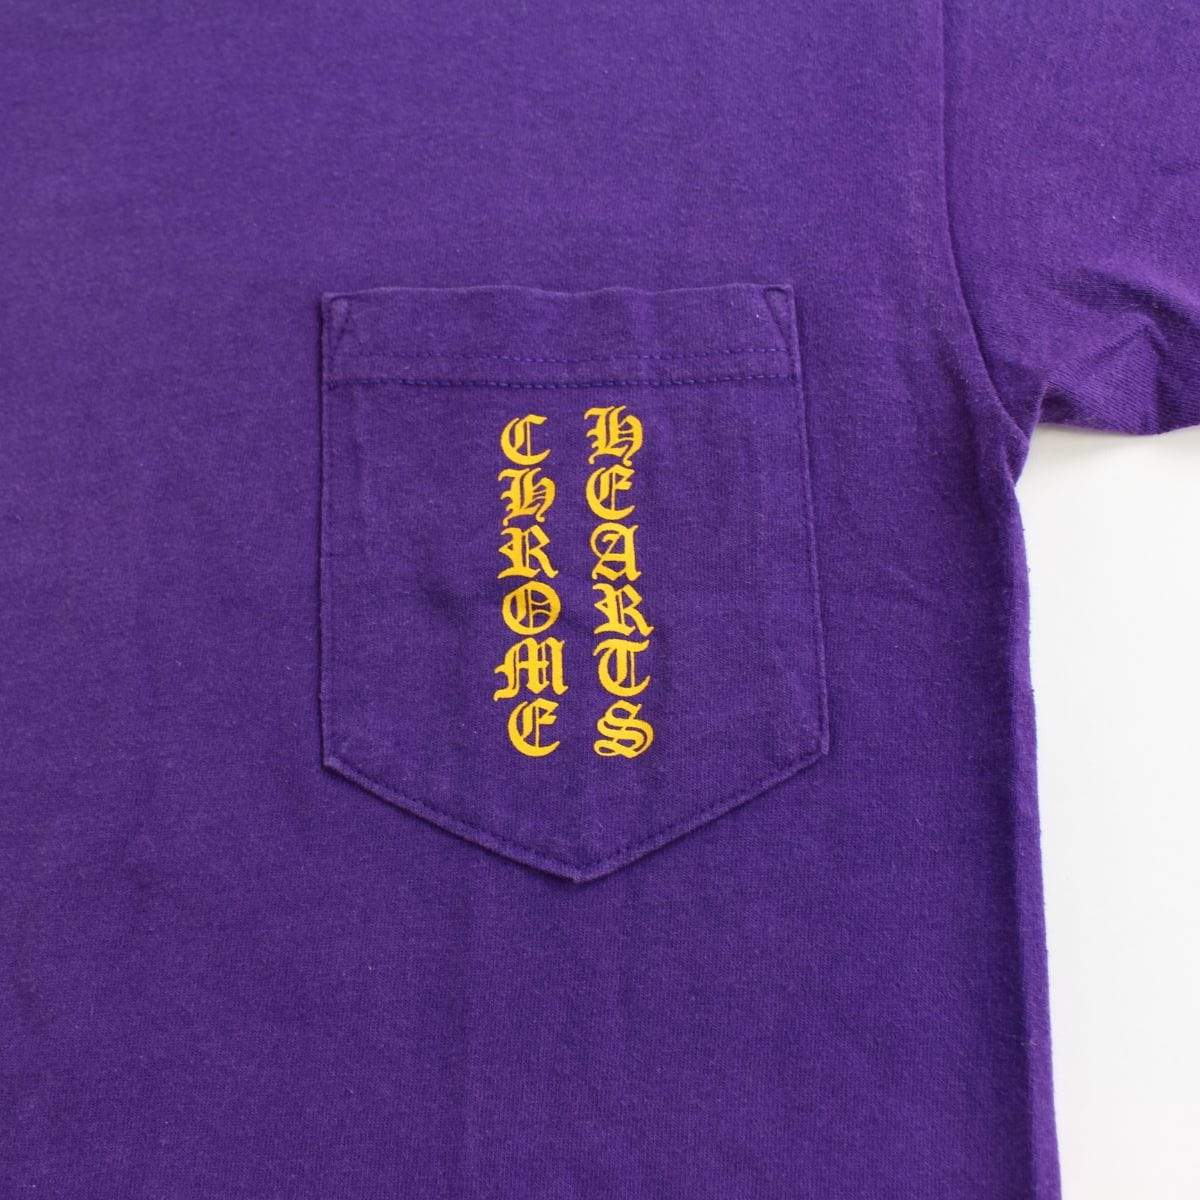 chrome hearts pocket tee purple - SaruGeneral